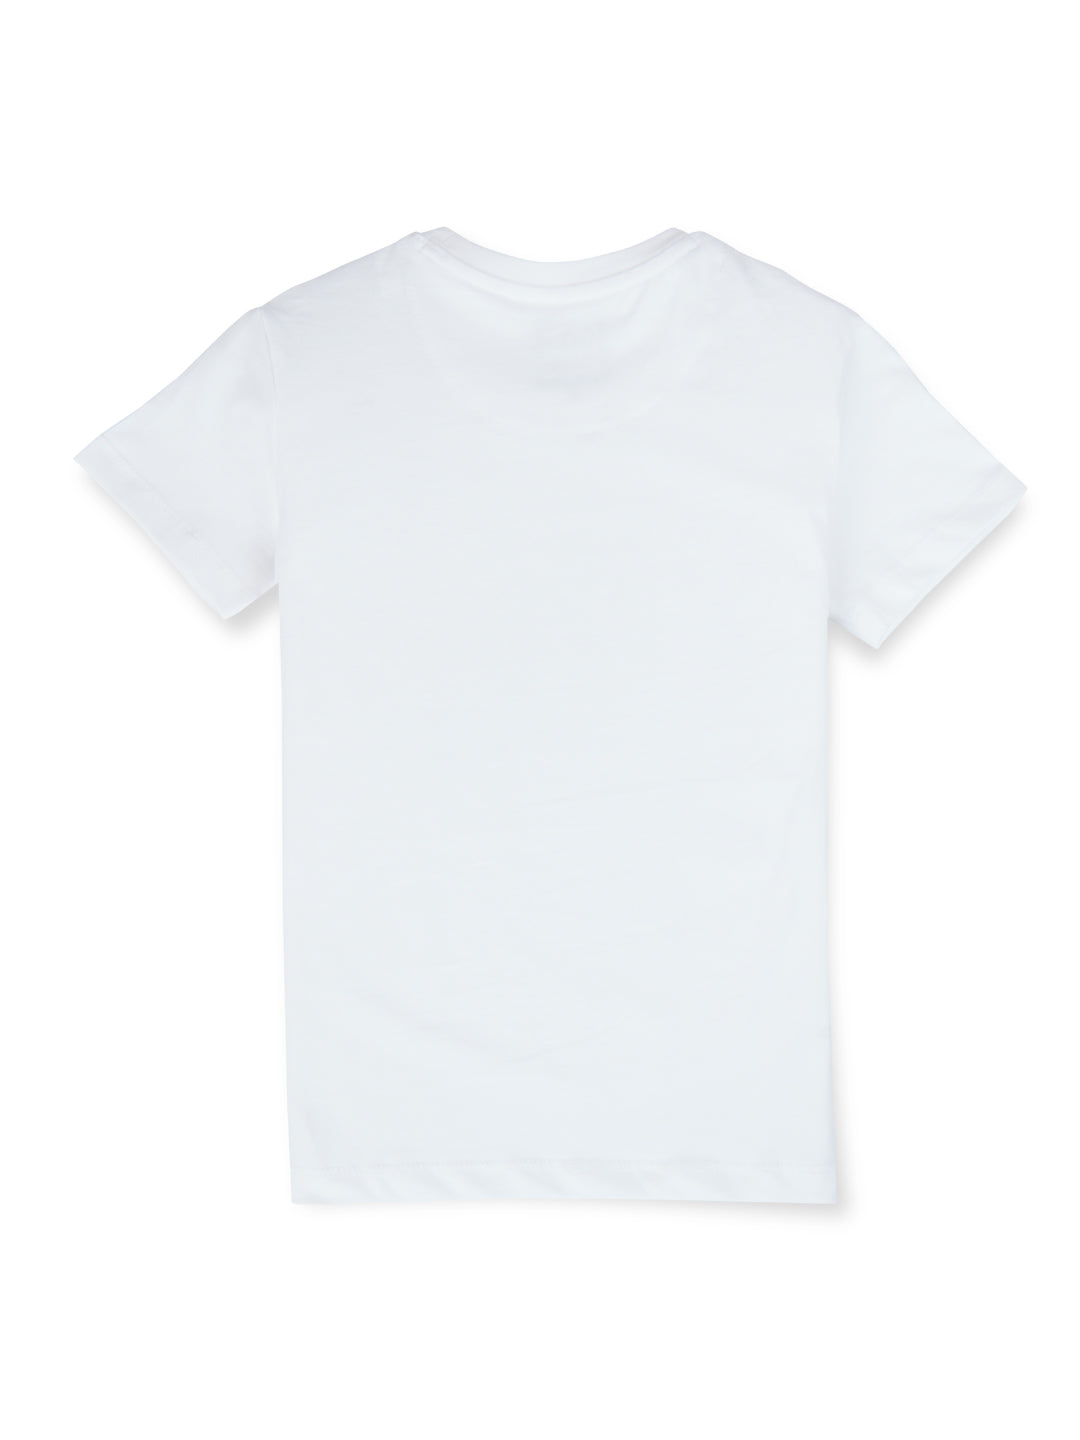 Boys White Printed Cotton Half Sleeves T-Shirt